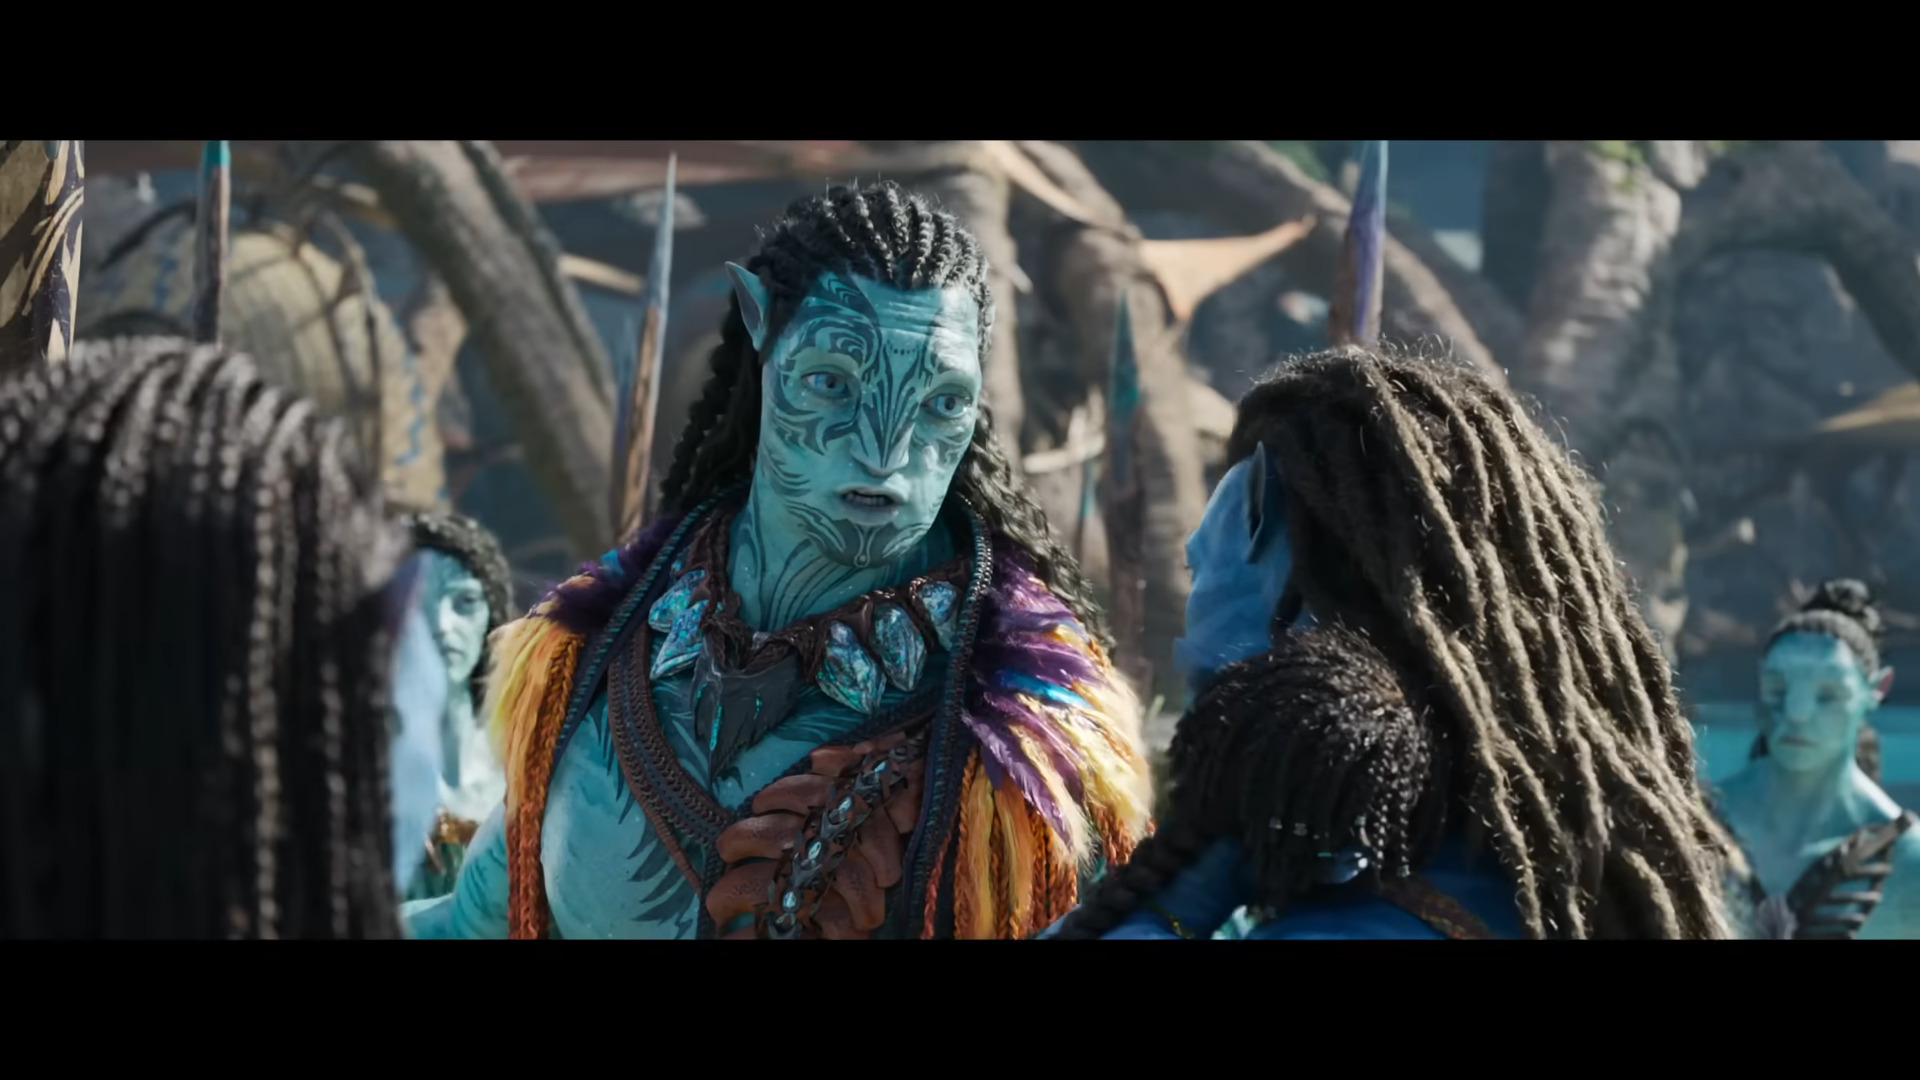 Tonowari (Cliff Curtis) greets Jake Sully (Sam Worthington) in Avatar: The Way of Water (2022), Disney via YouTube